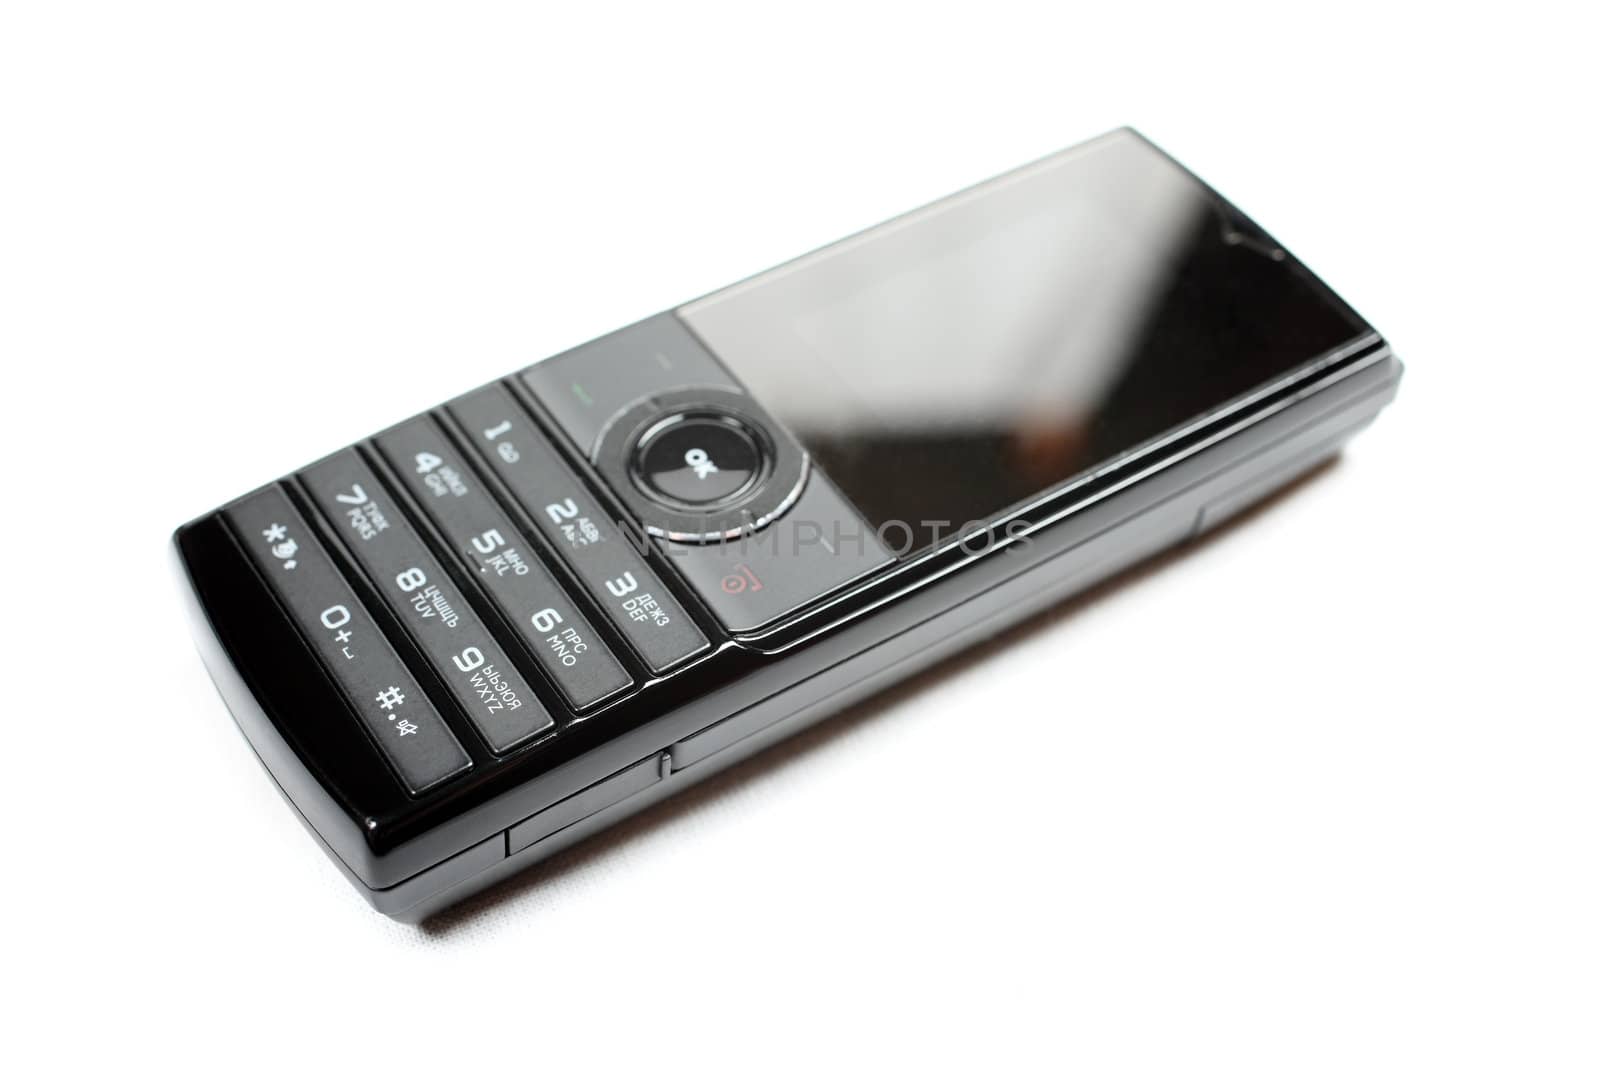 Black mobile phone isolated on white background.